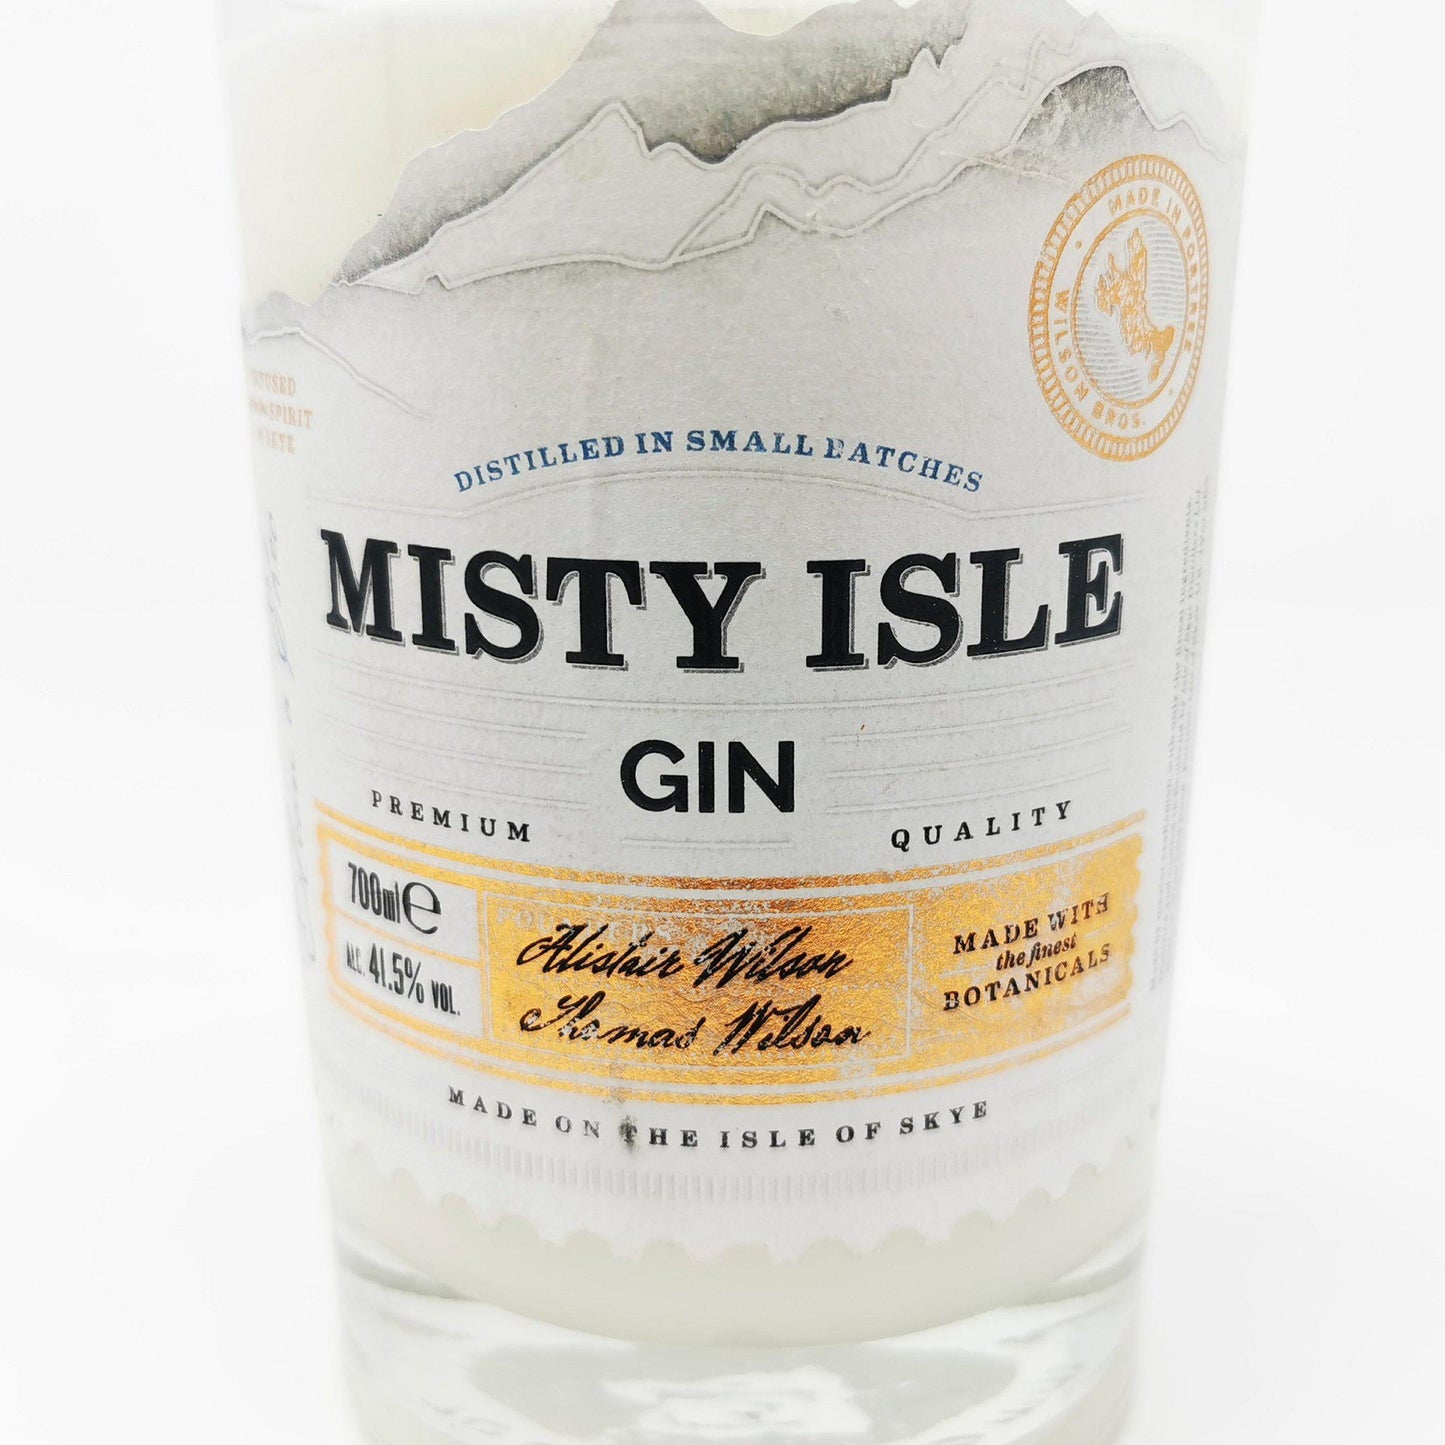 Misty Isle Gin Bottle Candle-Gin Bottle Candles-Adhock Homeware